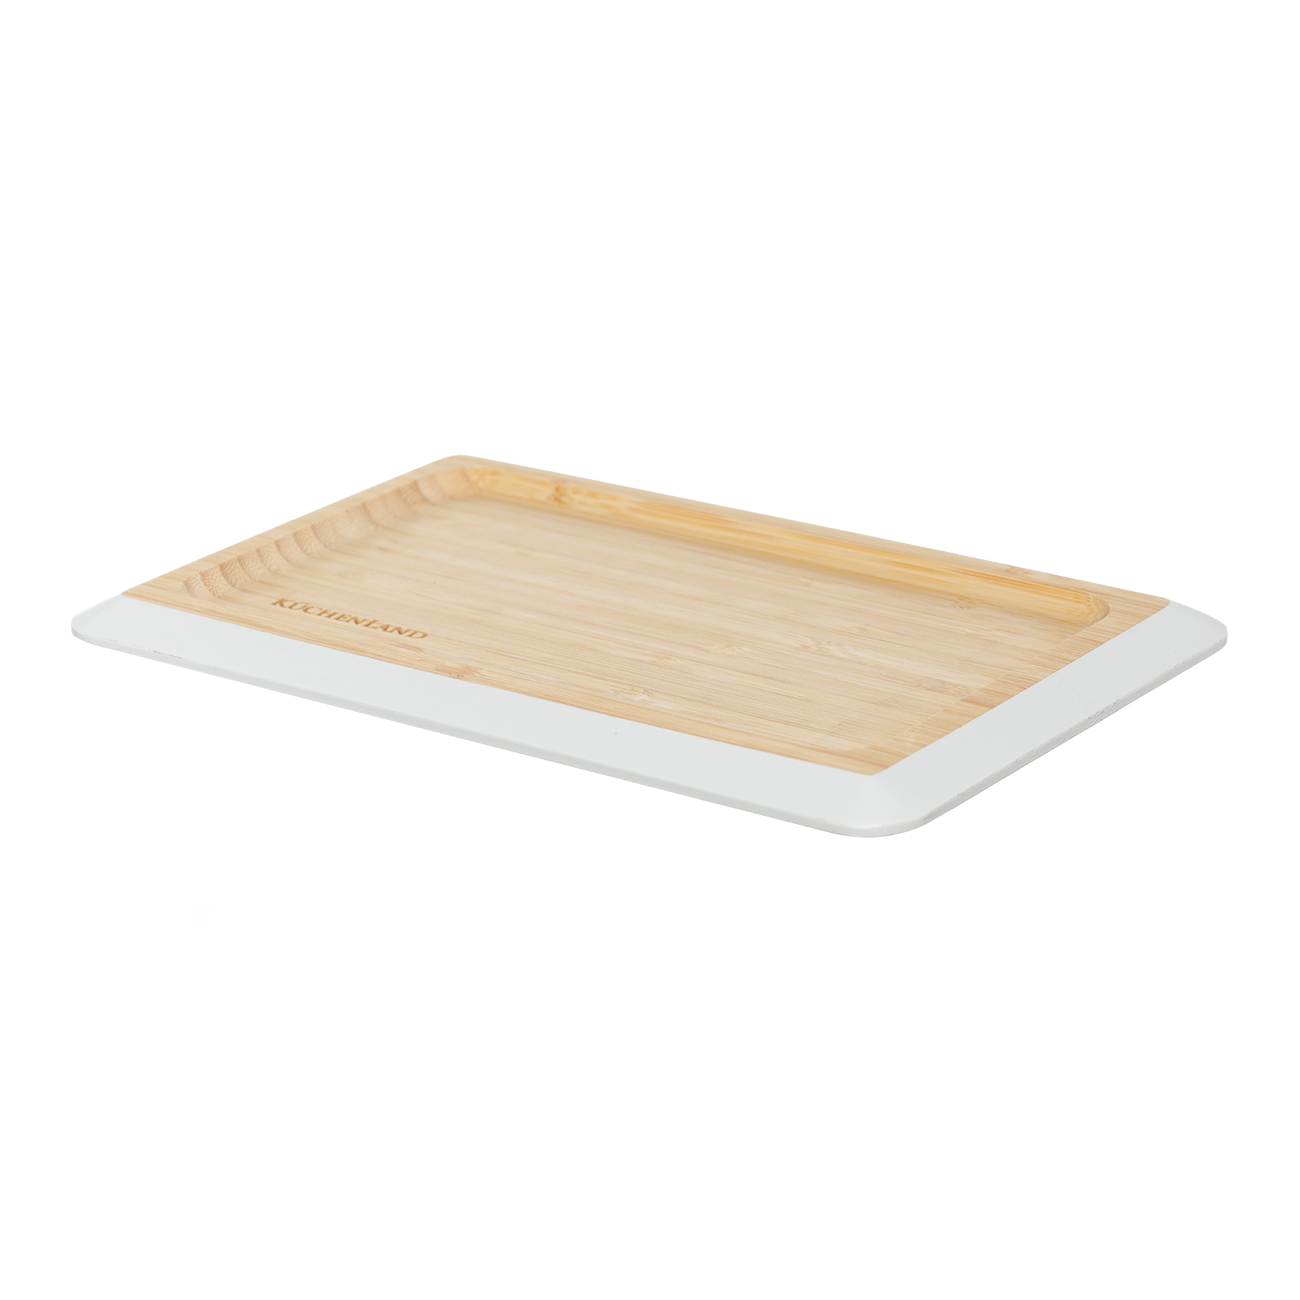 Dish, 24x16 cm, bamboo, rectangular, grey edging, Bamboo soft изображение № 4